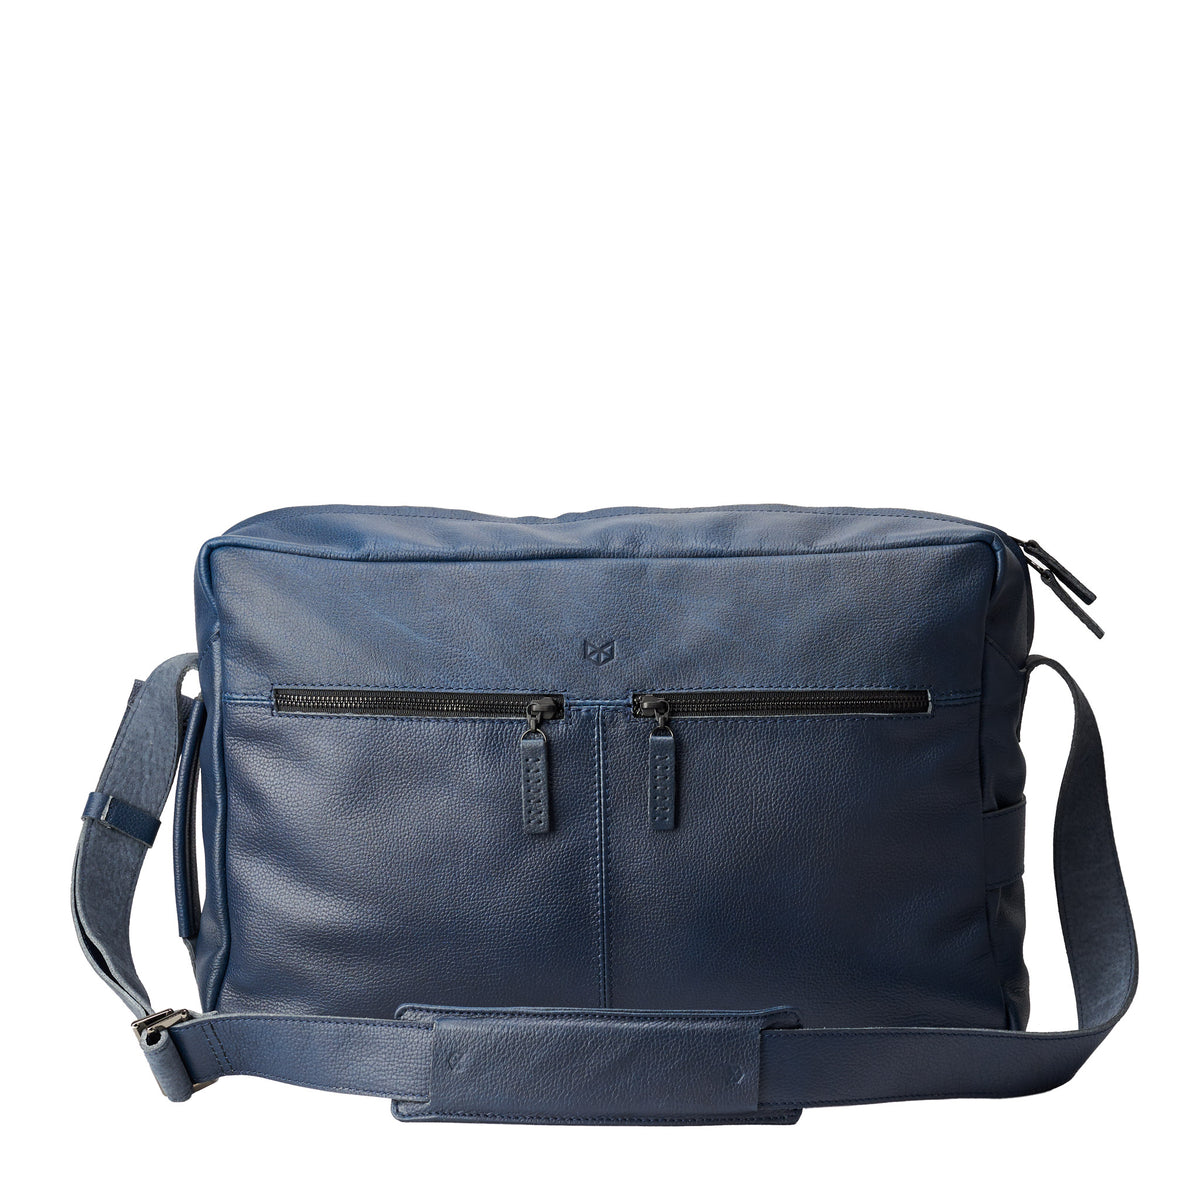 Front leather. Addox Blue shoulder messenger bag for Men by Capra Leather